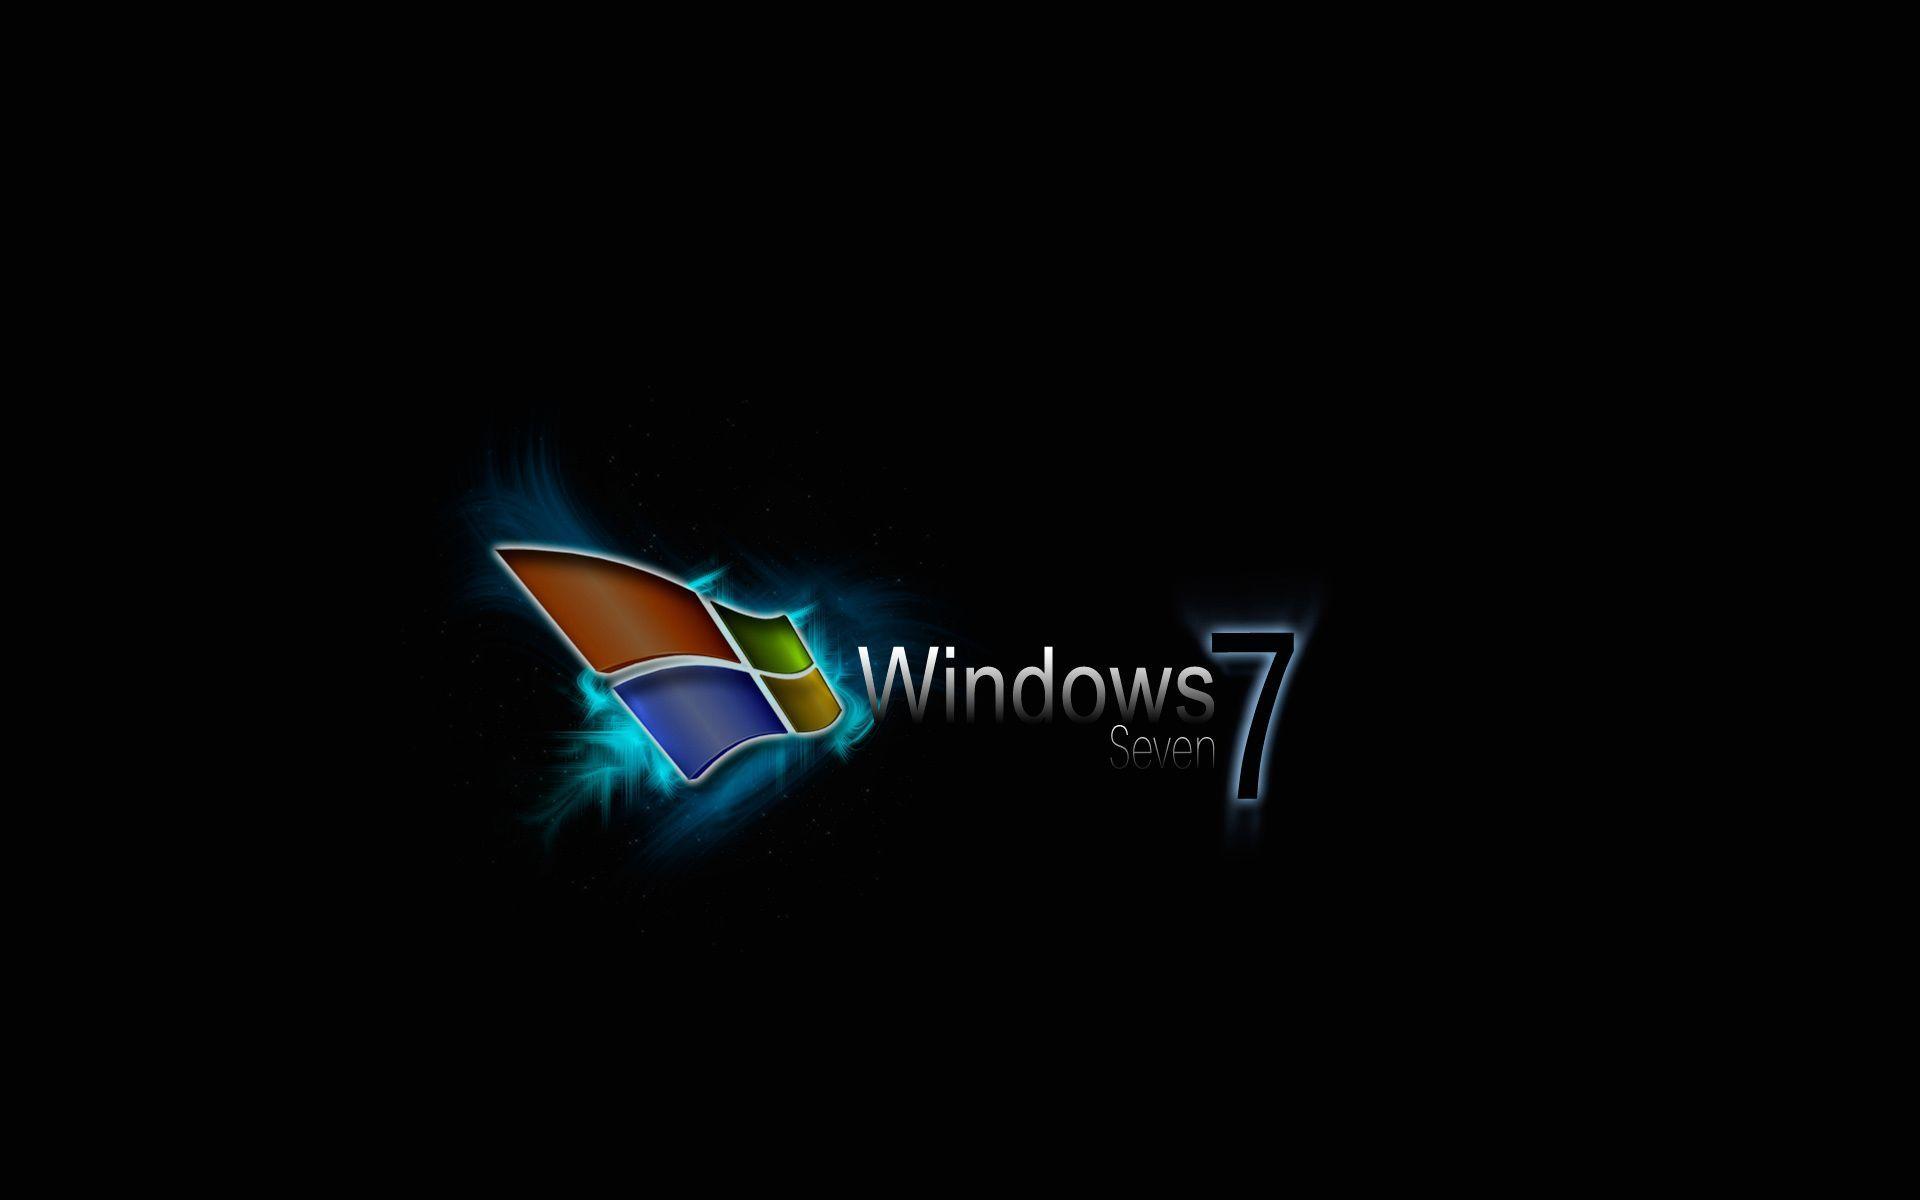 Microsoft Windows 7 wallpapers